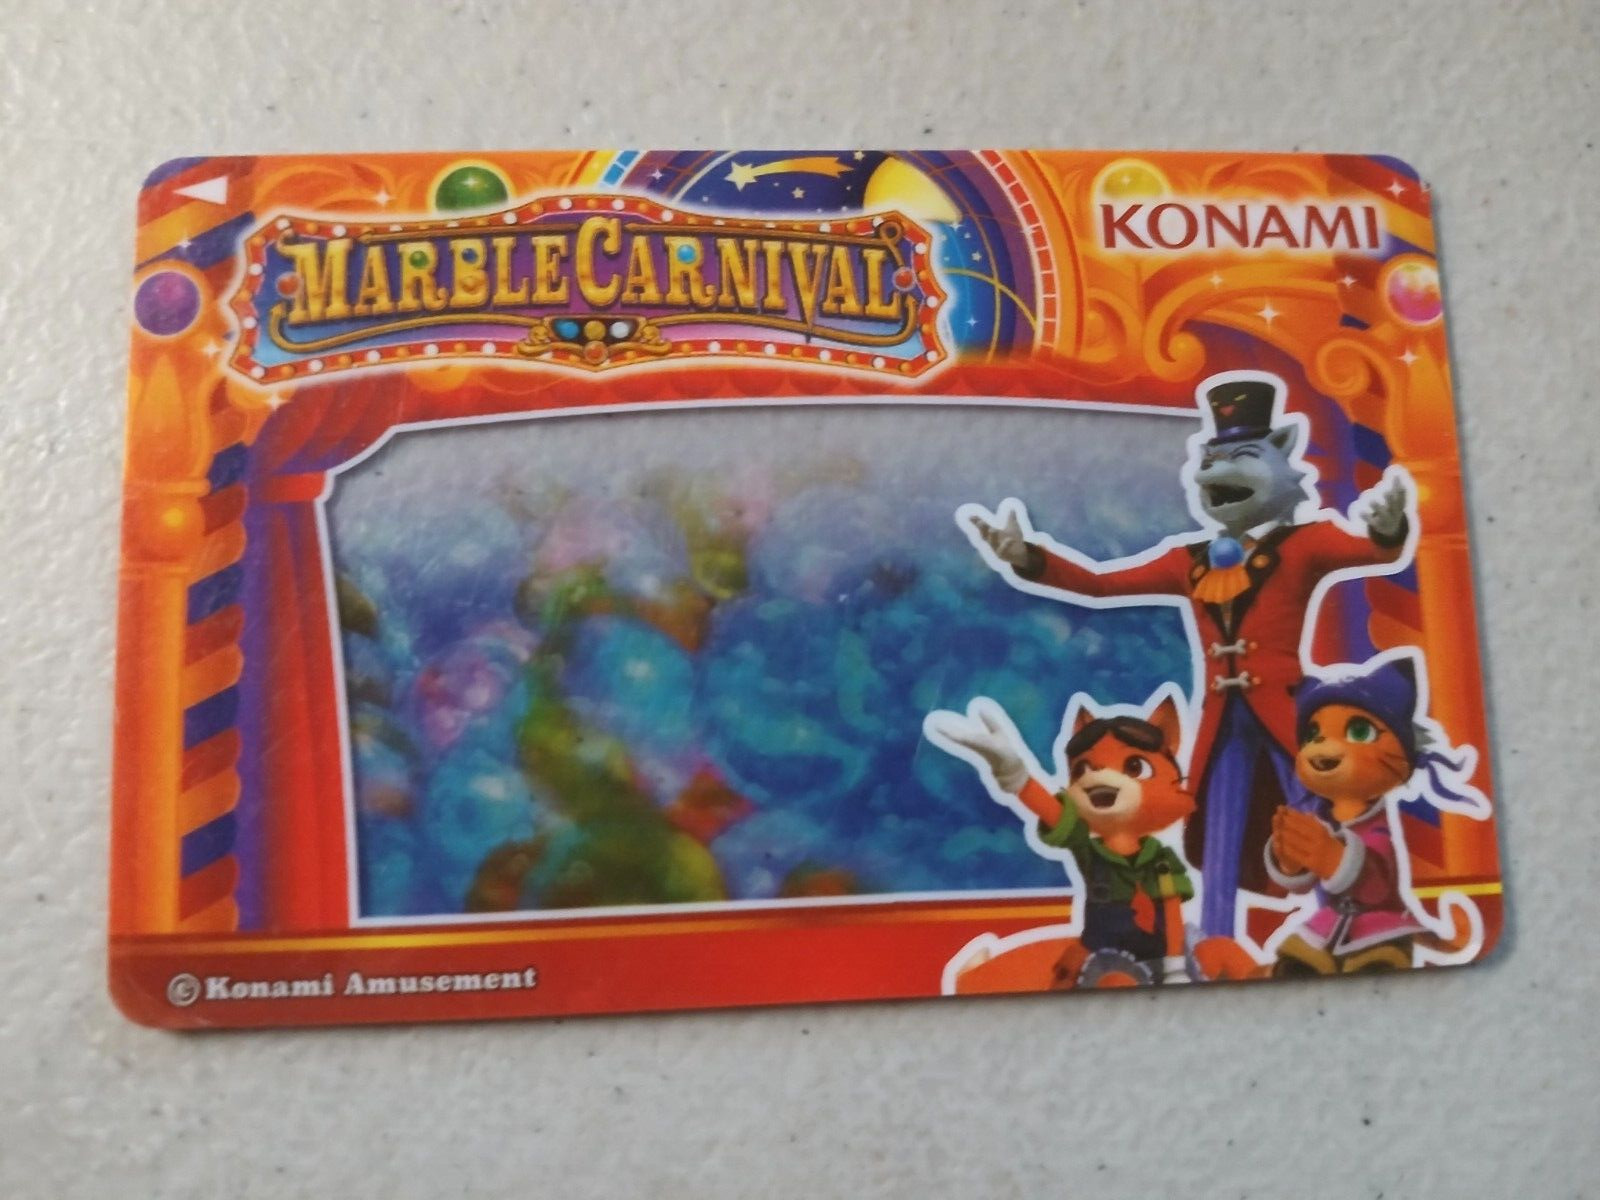 RARE Marble Carnival Card 006 - Konami - Round 1